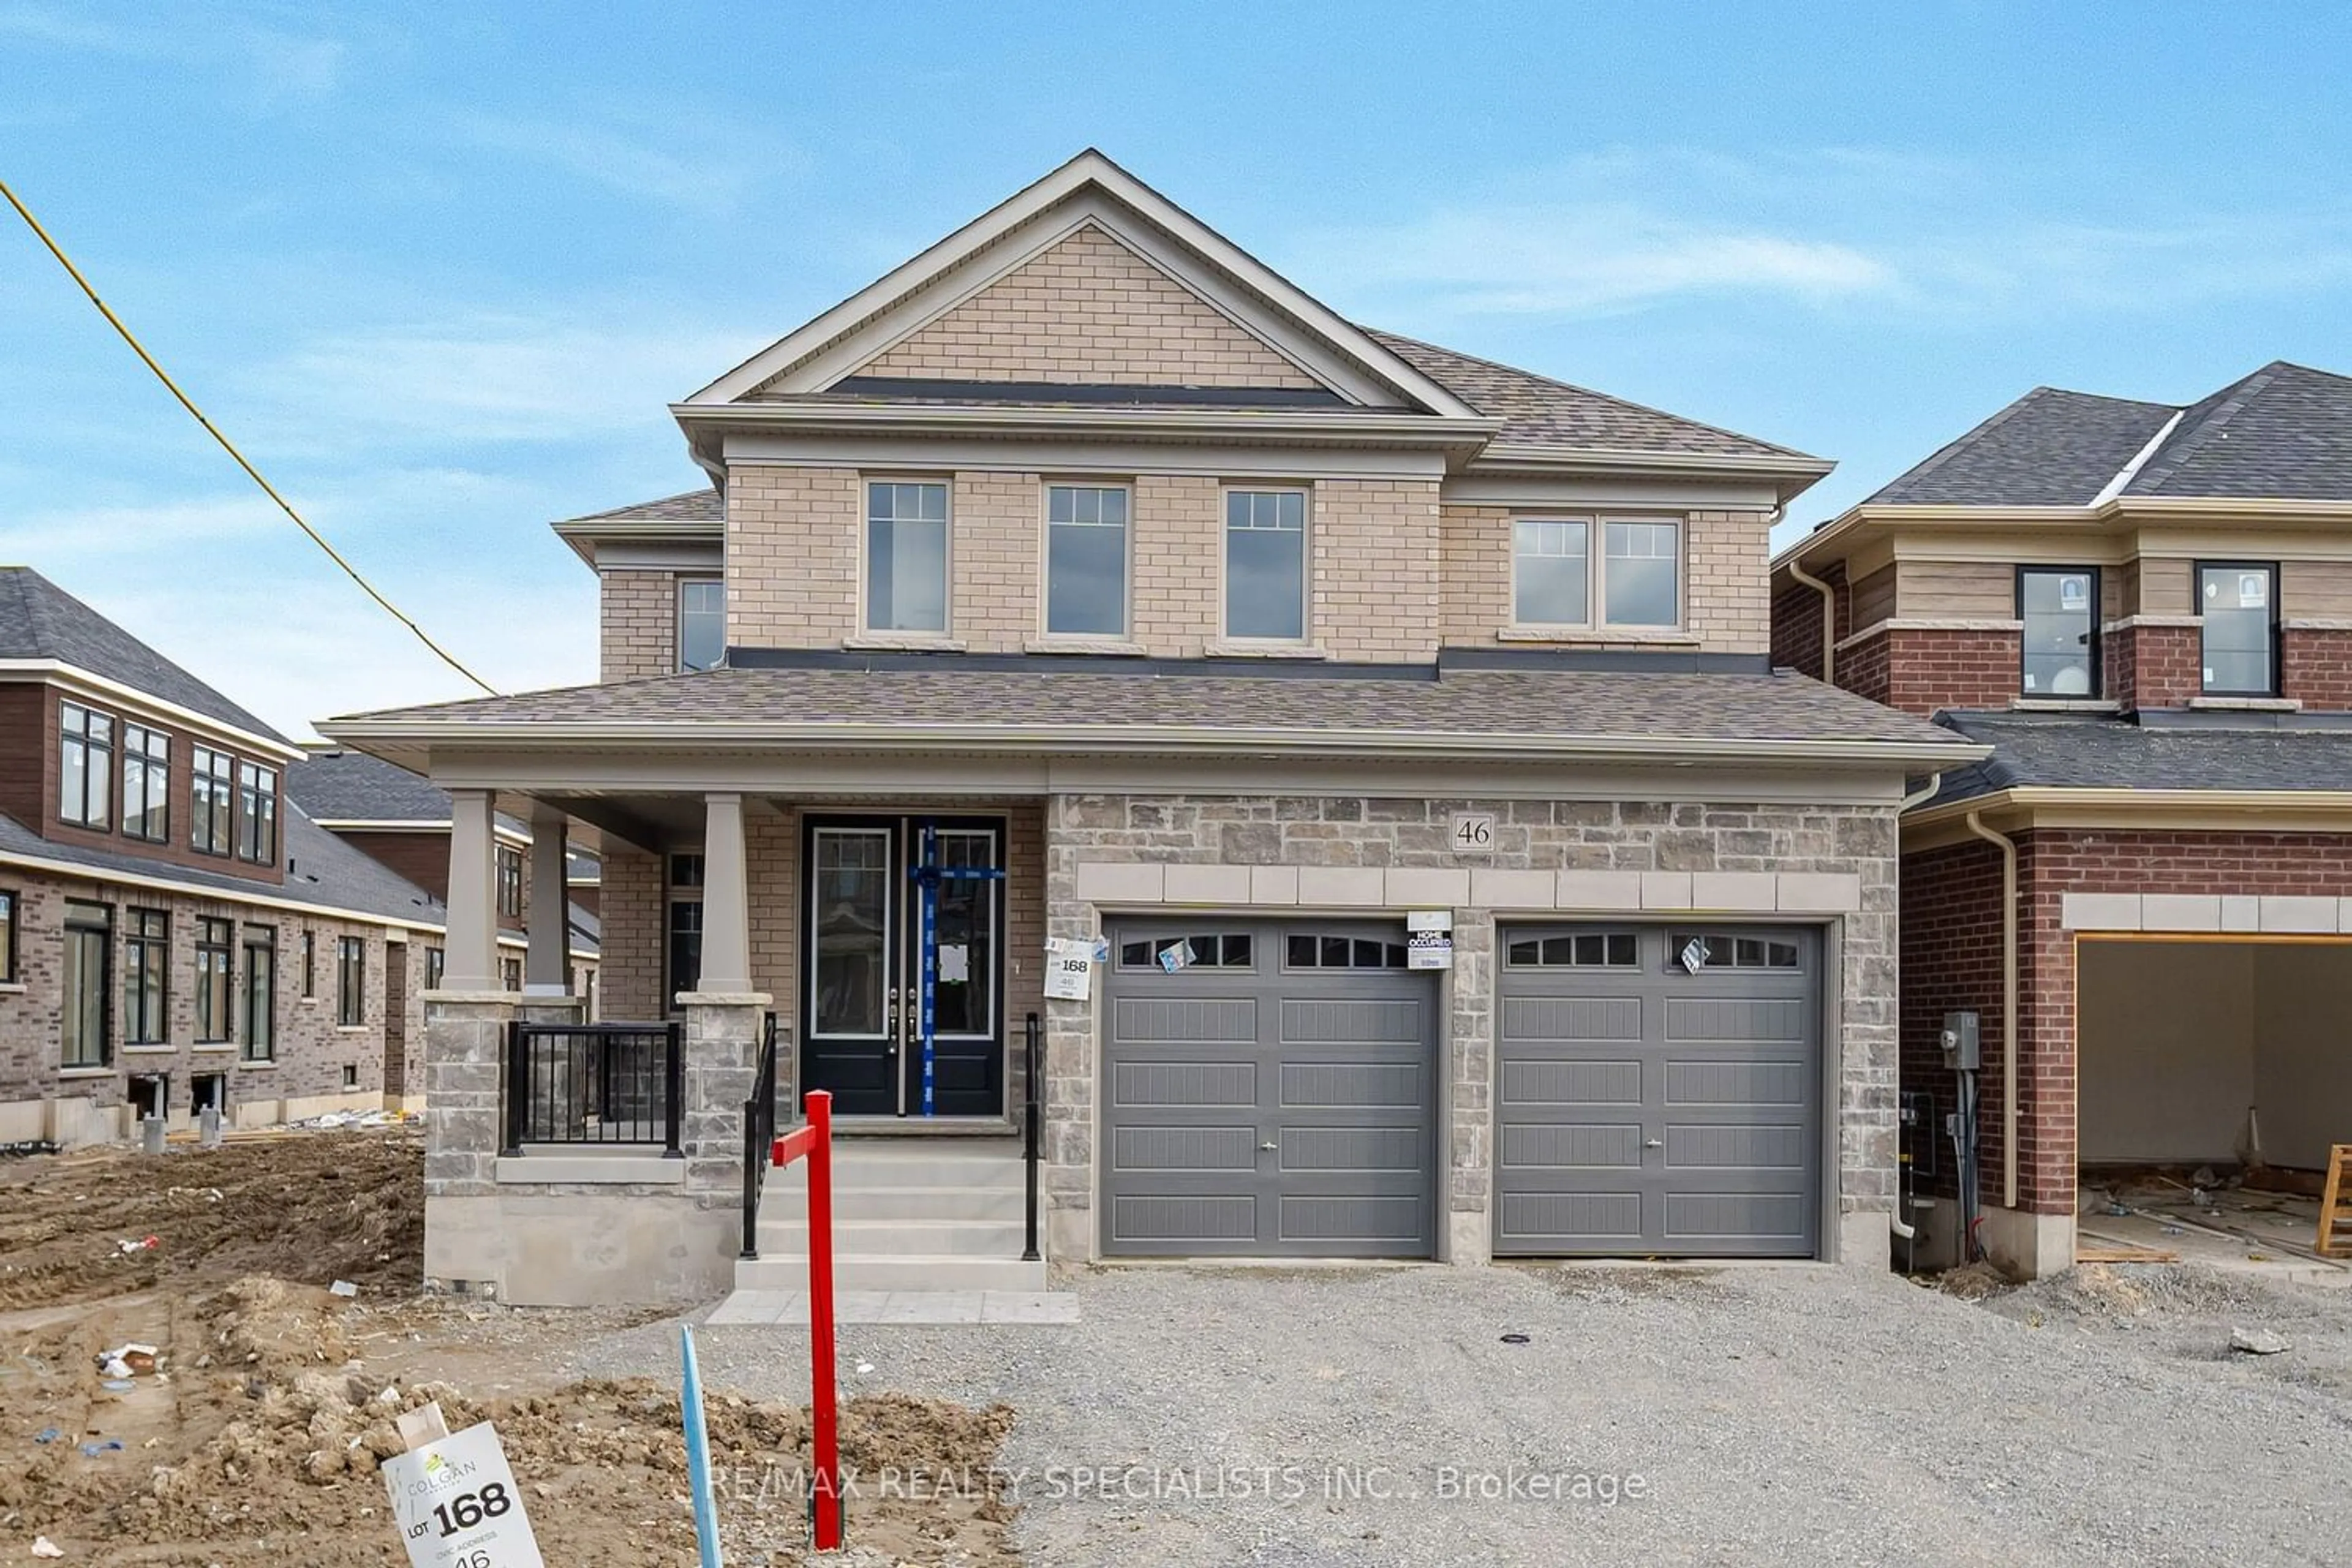 Home with brick exterior material for 46 Sparrow Way, Adjala-Tosorontio Ontario L0G 1W0